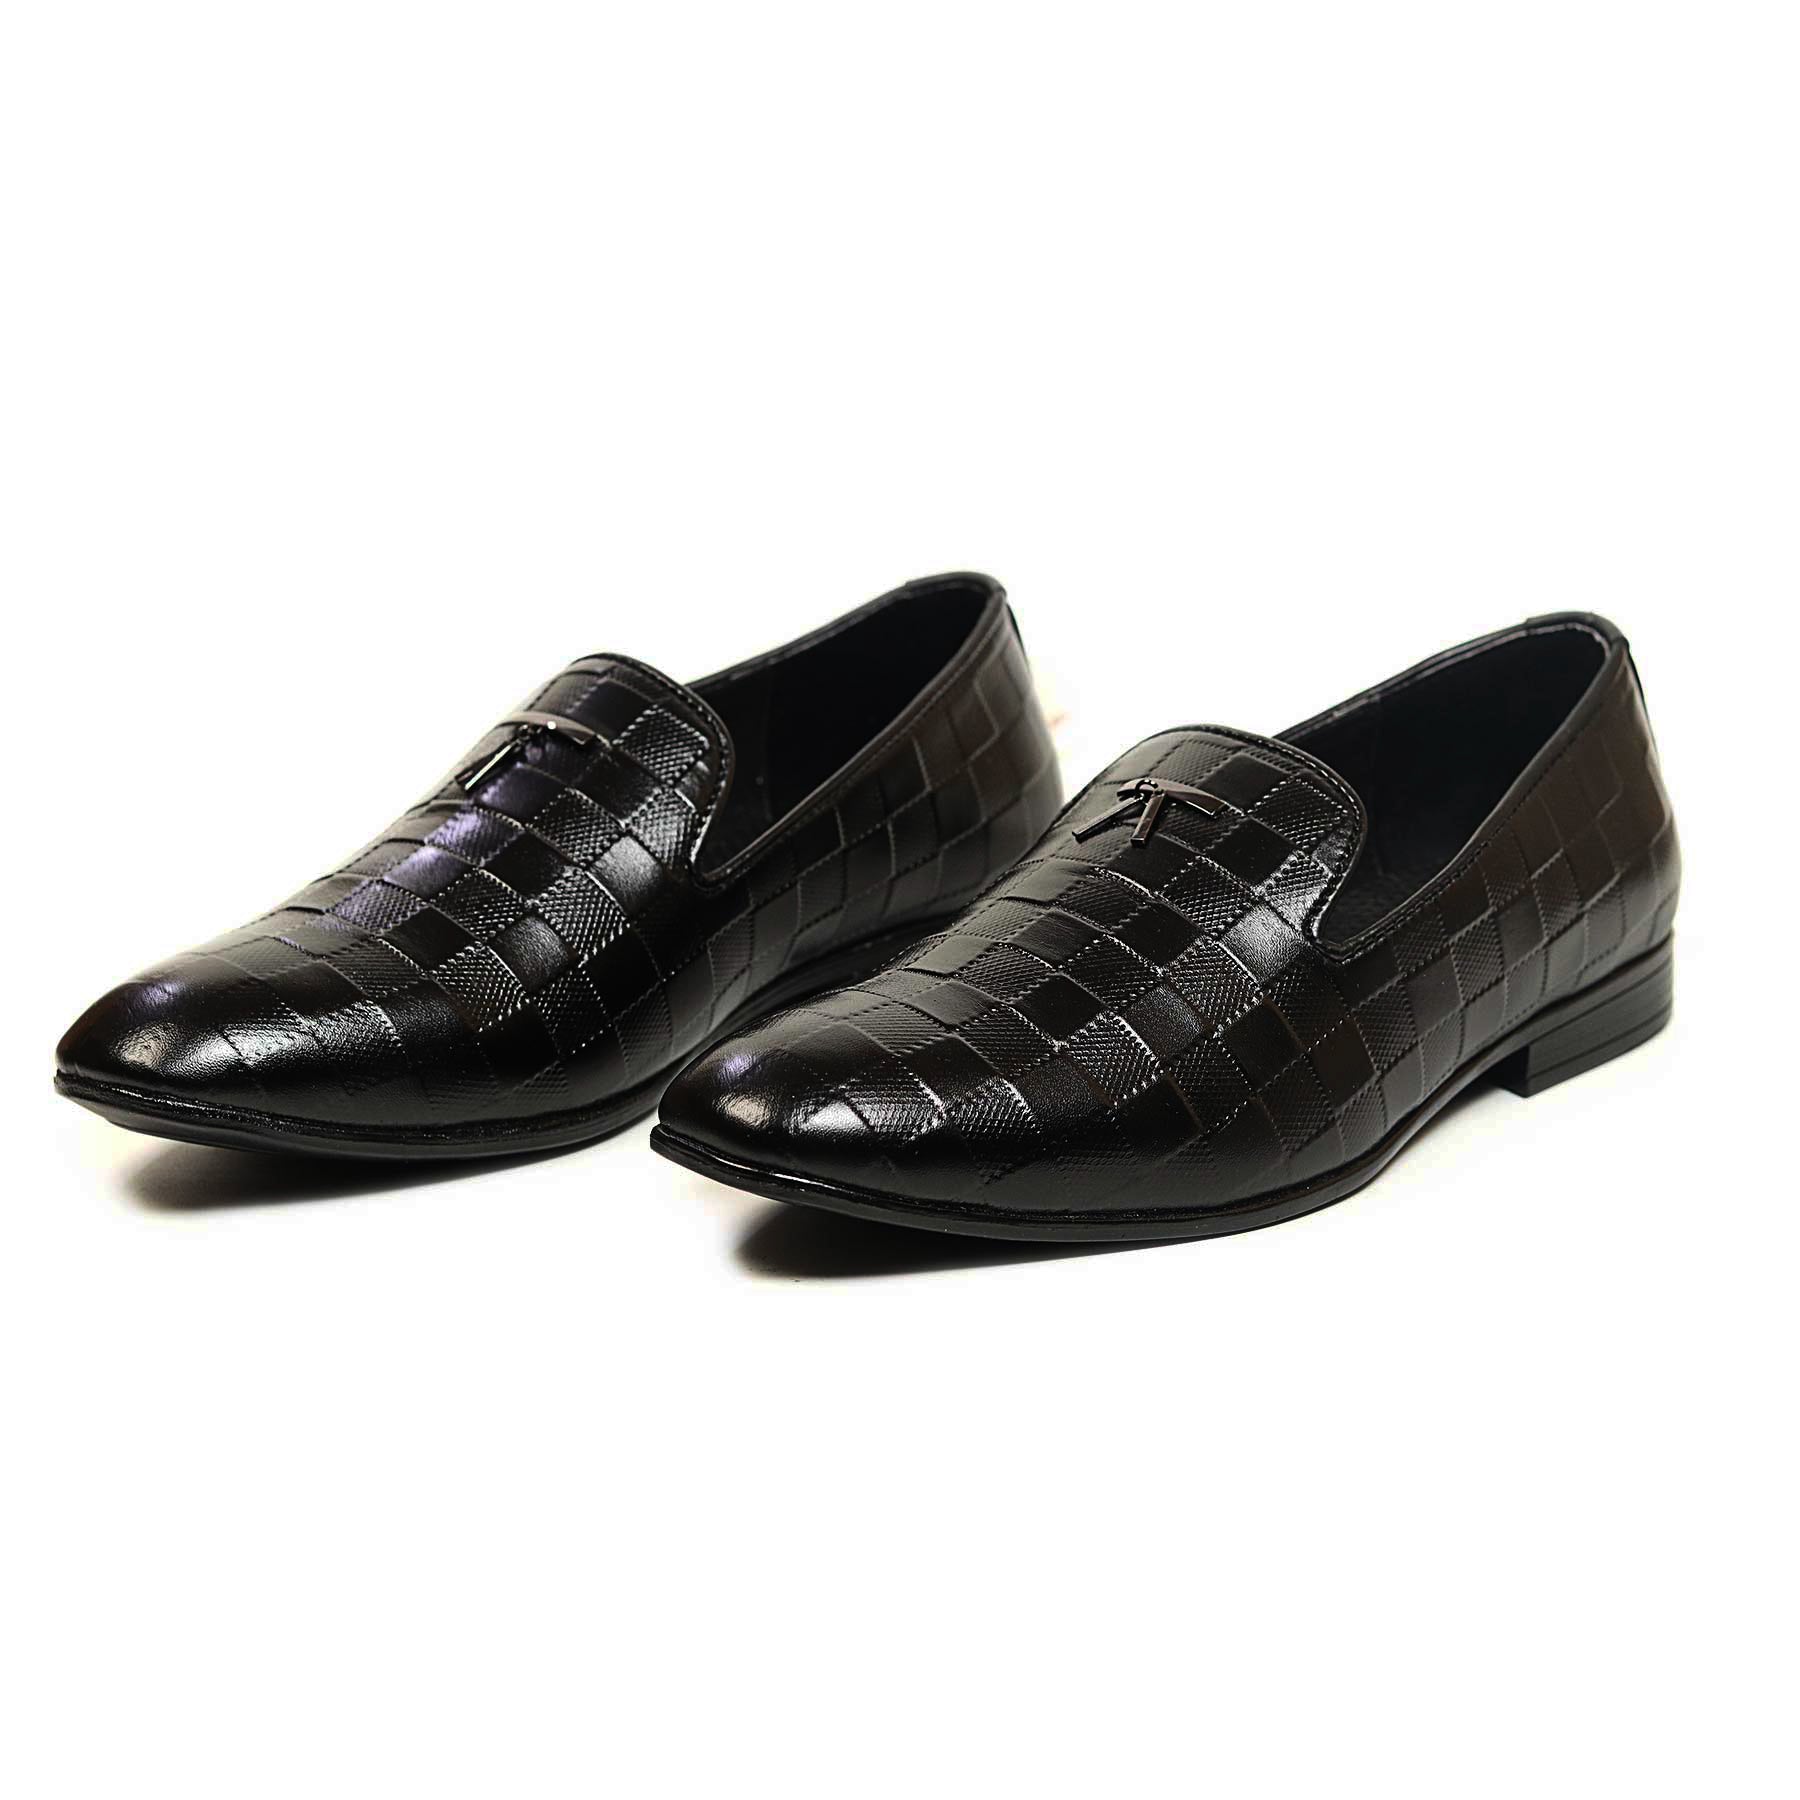 Zays Leather Premium Casual Shoe For Men (Black) - SF80